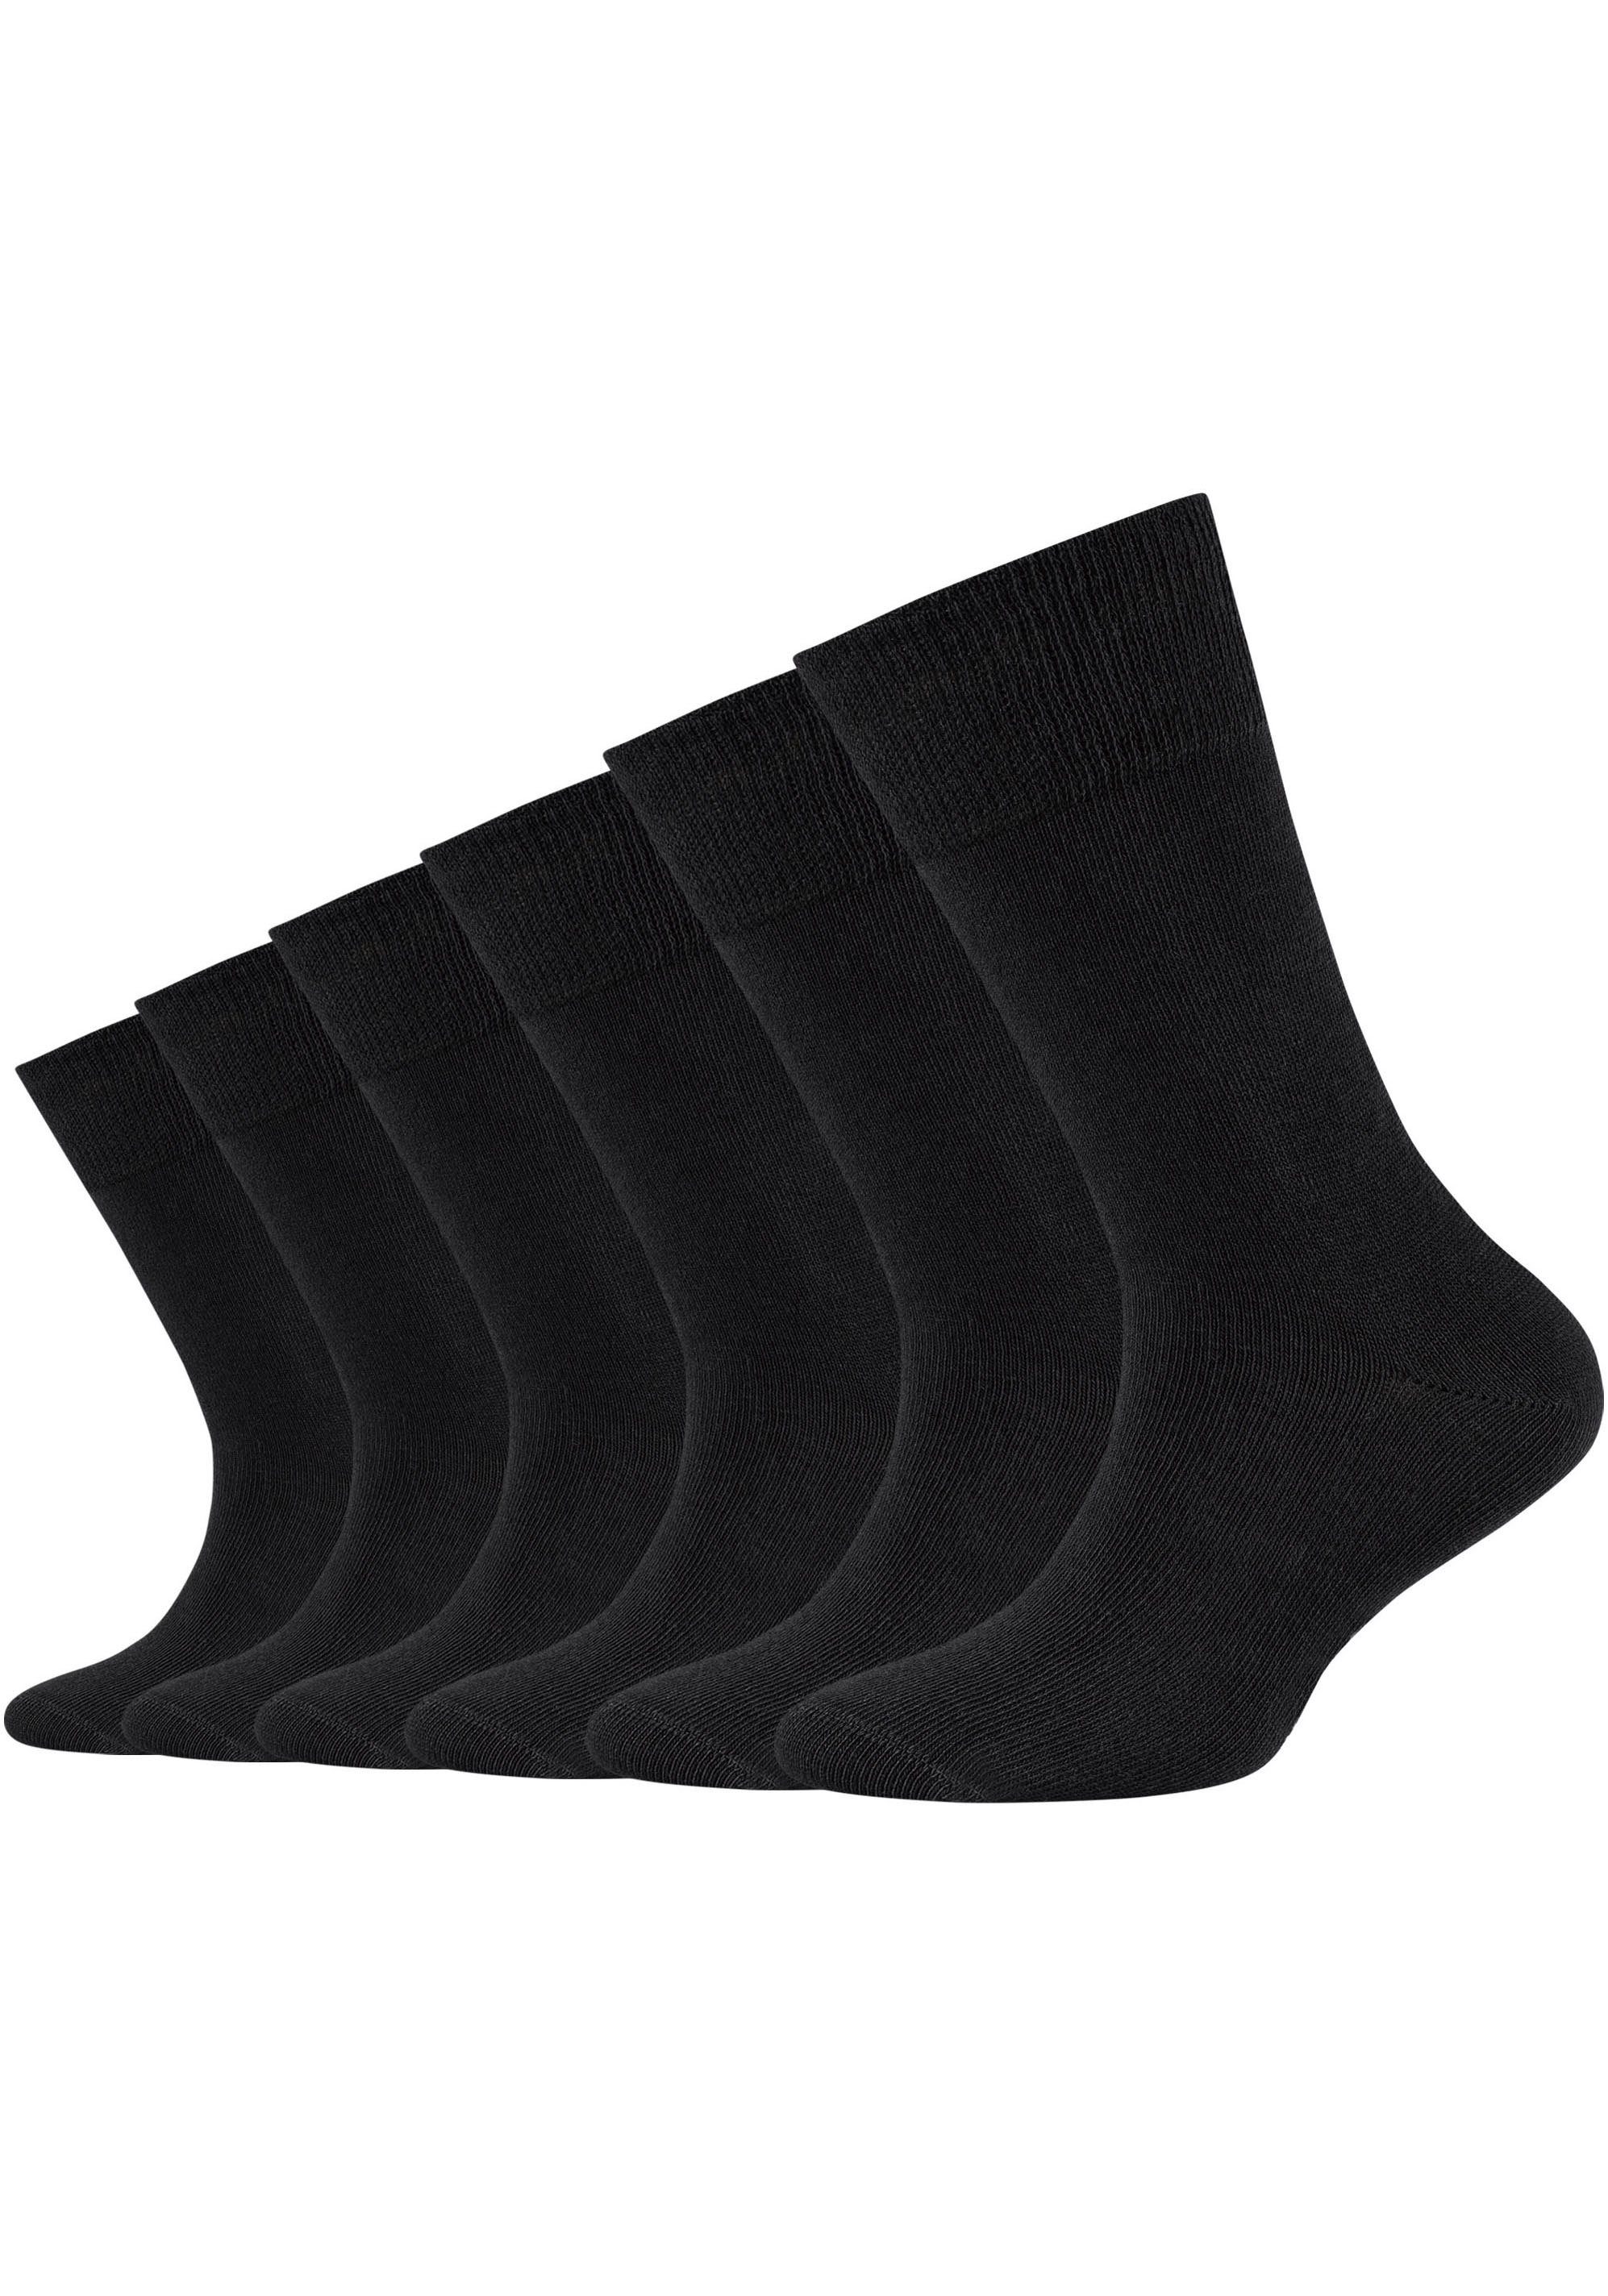 Hoher (Packung, gekämmter Baumwolle Socken schwarz Camano 6-Paar) Anteil an